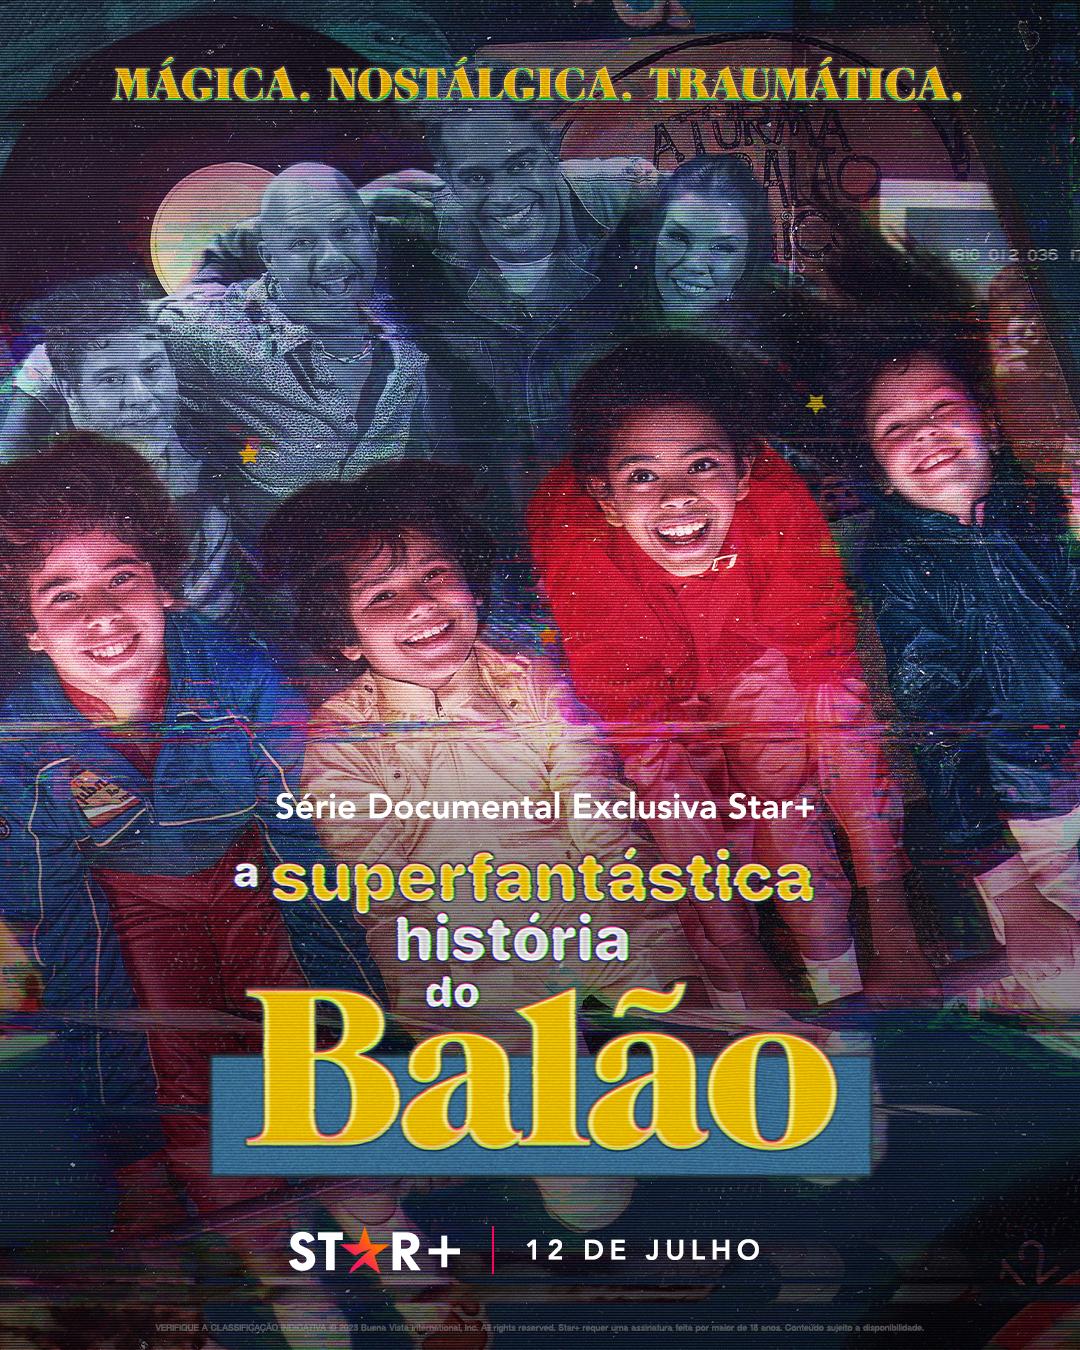 TV ratings for The Superfantastic Story Of Balão (A Superfantástica História Do Balão) in the United Kingdom. Star+ TV series